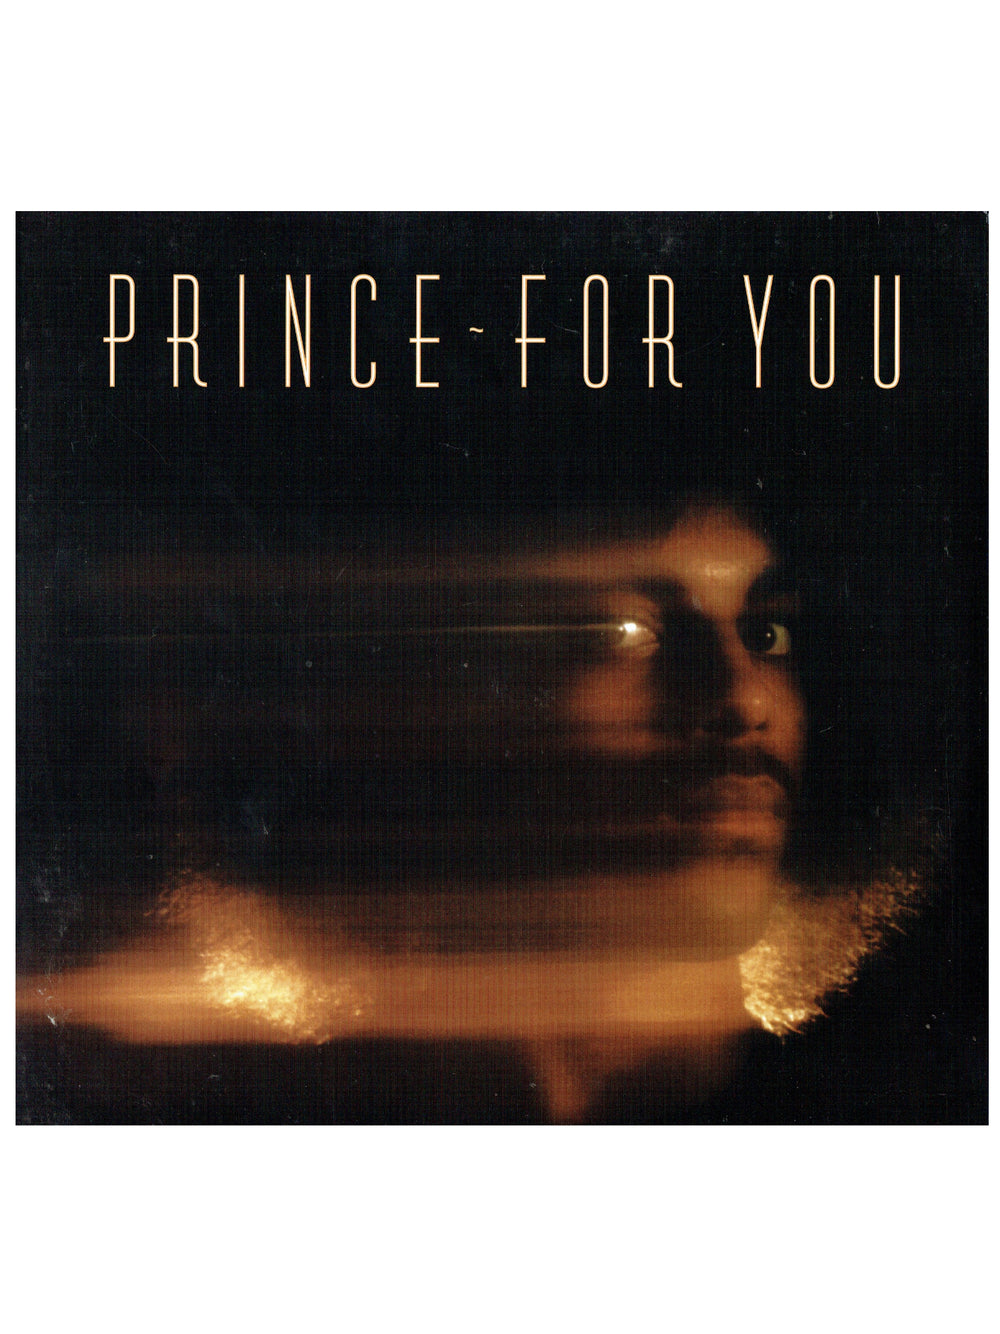 Prince For You Vinyl Album Remaster 180 Gram